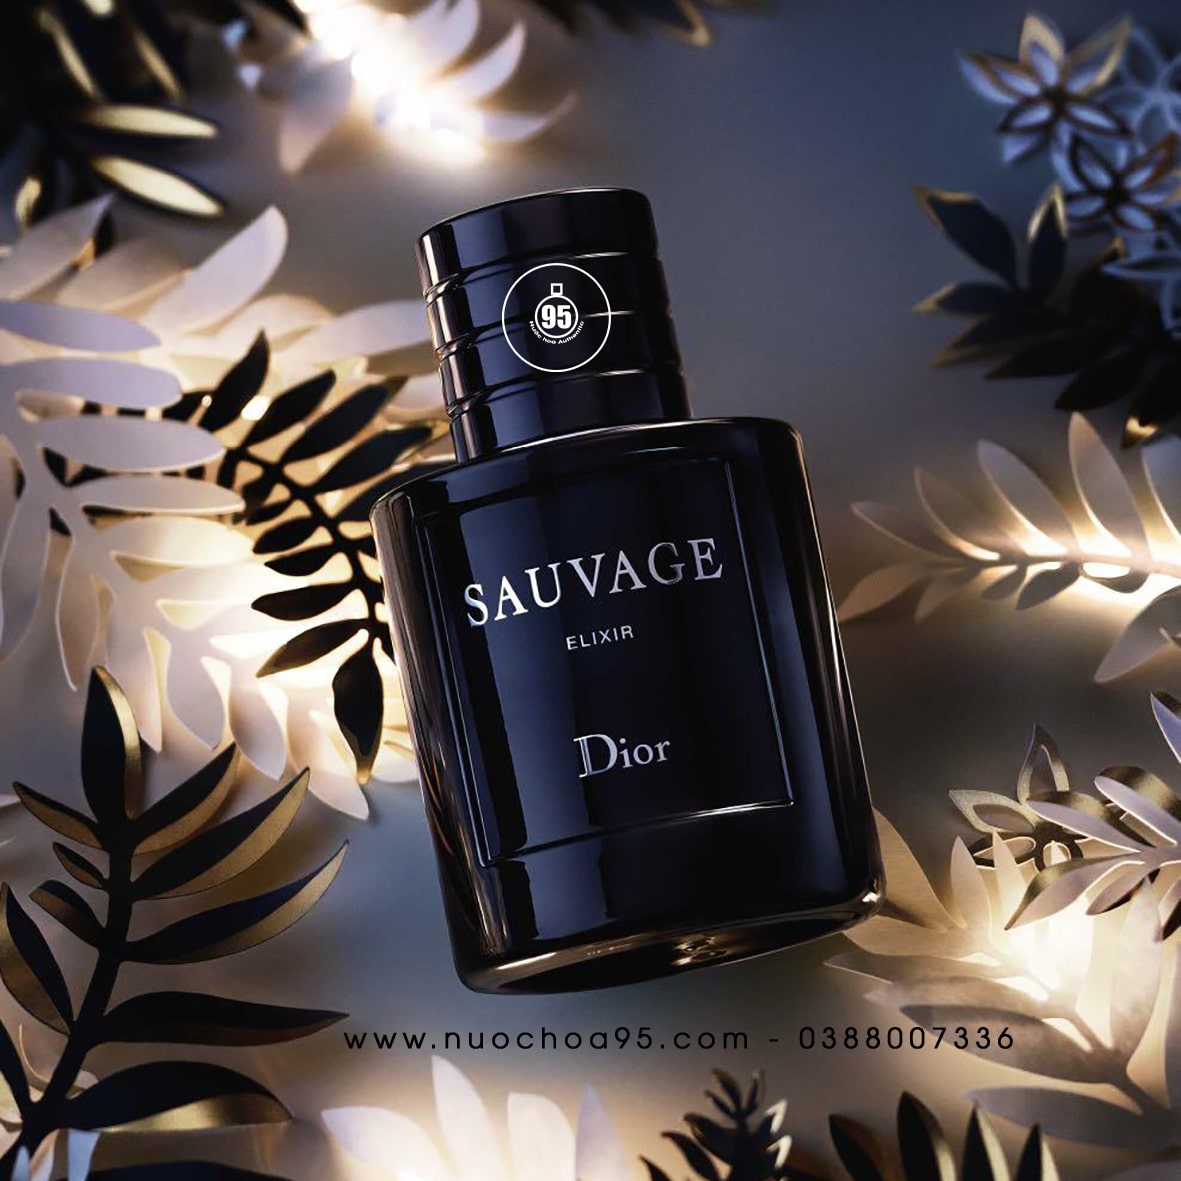 Nước hoa Sauvage Dior Elixir EDP - Ảnh 2